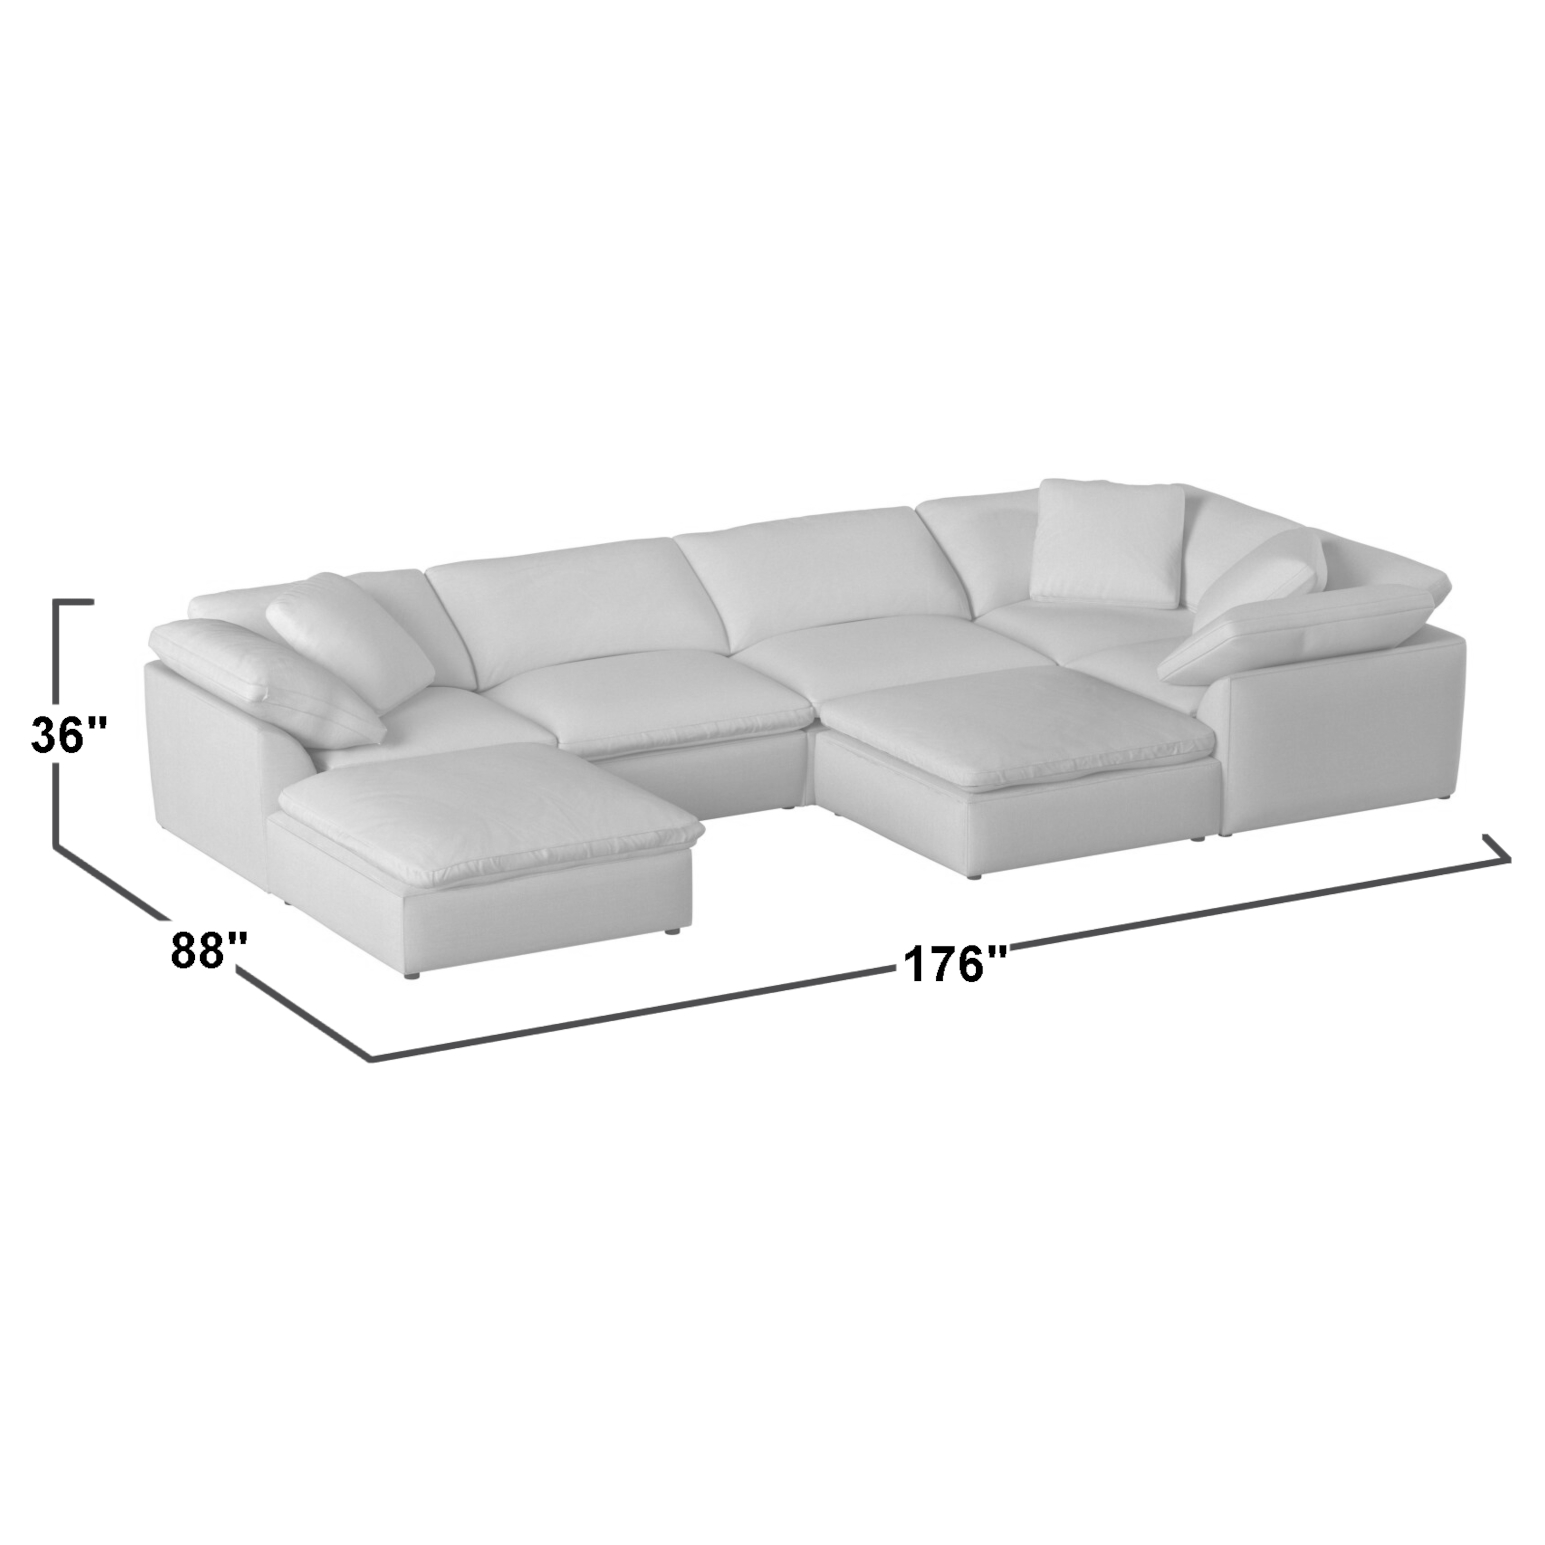 Sunset Trading Cloud Puff 2 Piece Slipcovered Modular Sectional Sofa